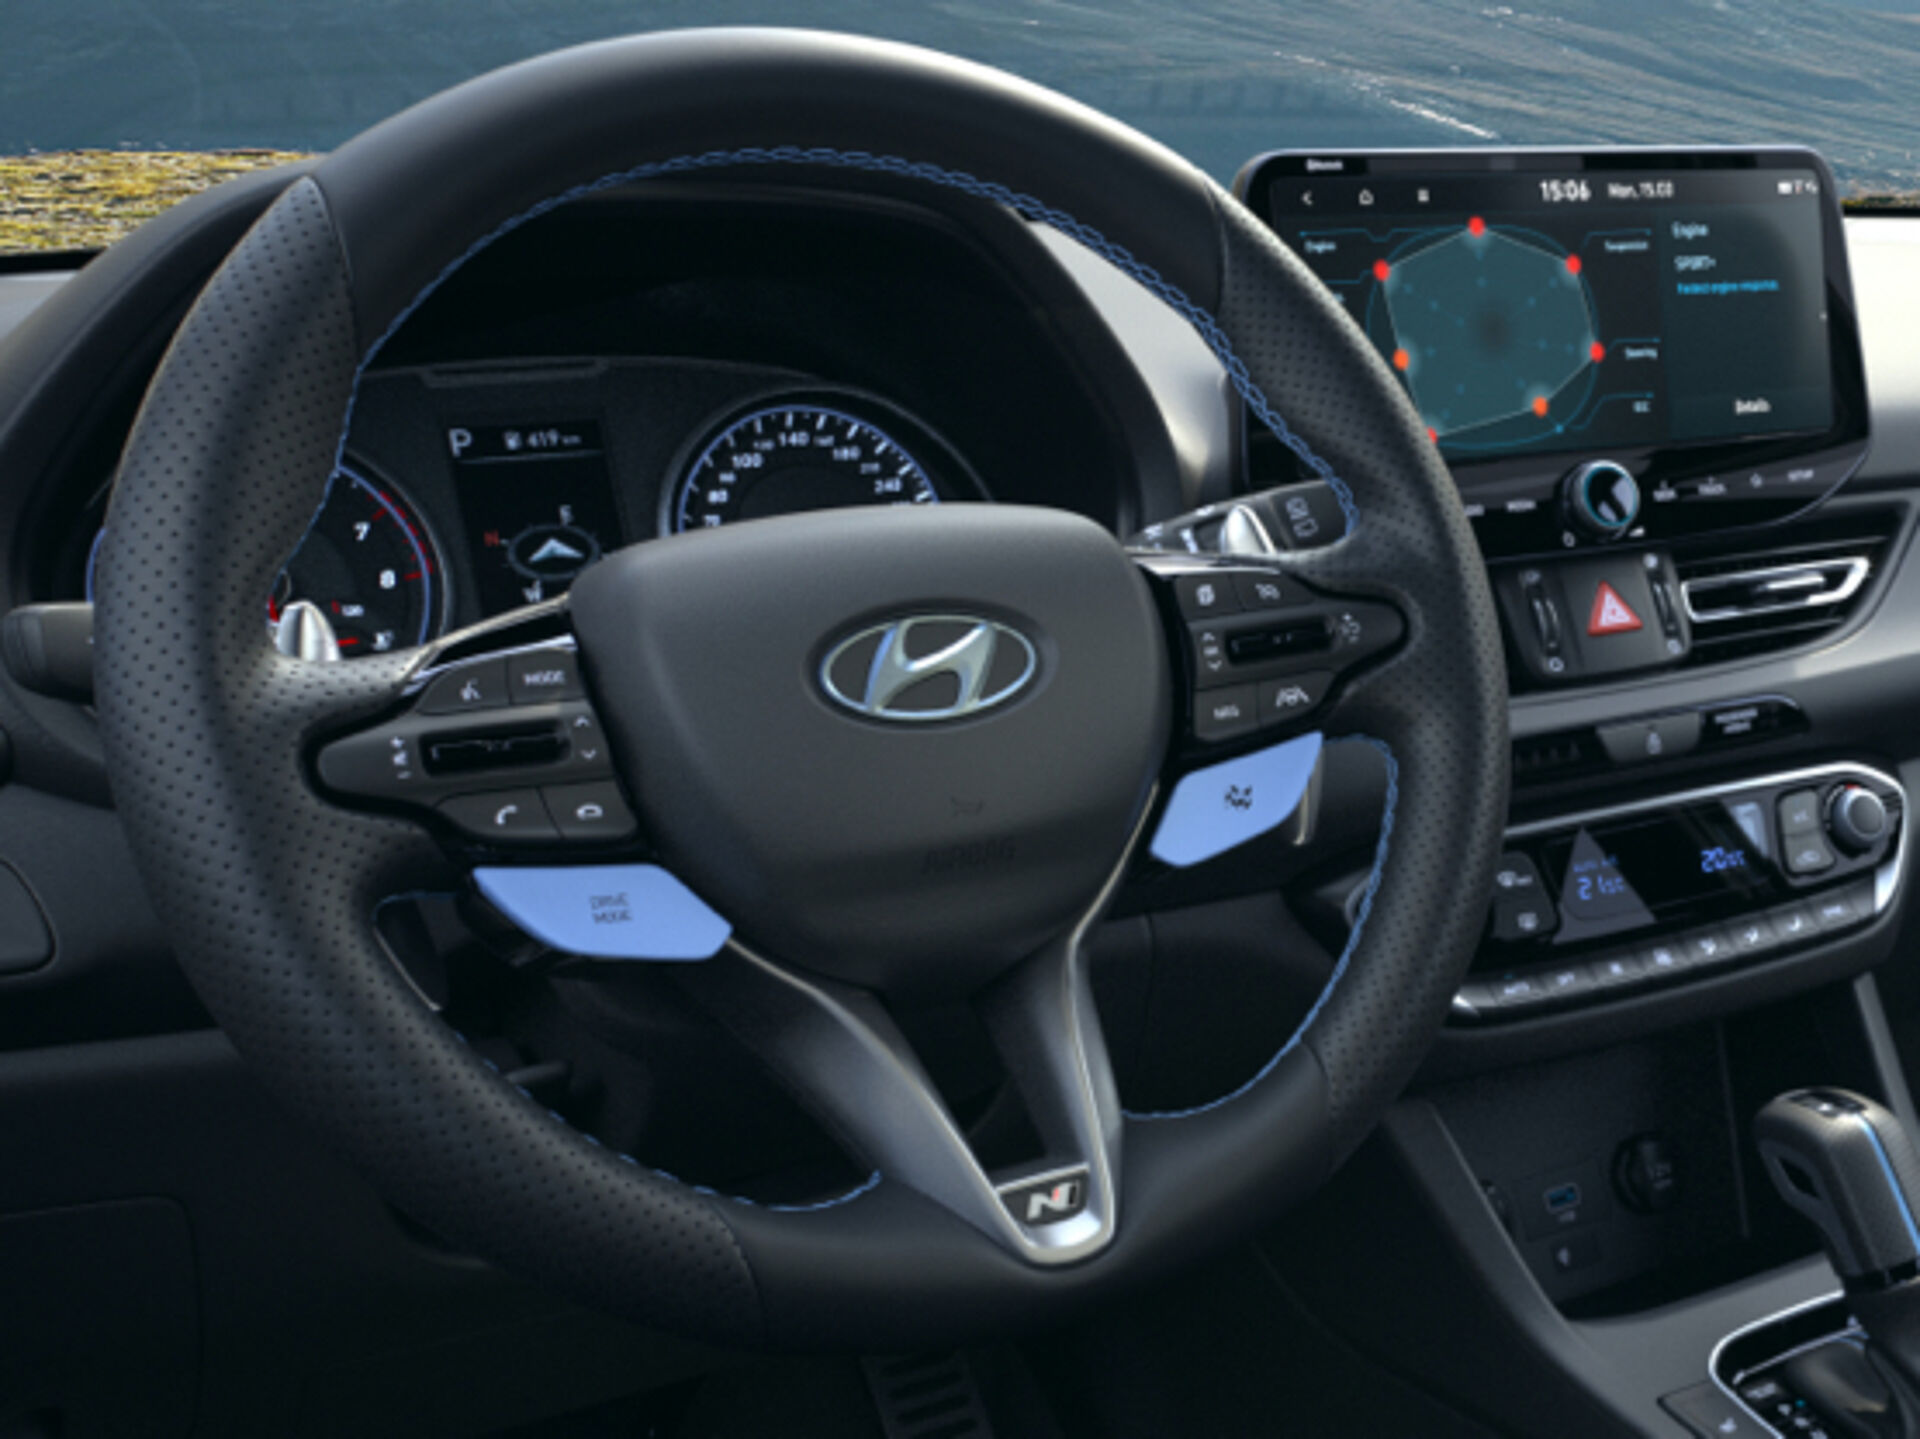 Hyundai i30 N: Highlight ist das 8-Gang-Doppelkupplungsgetriebe